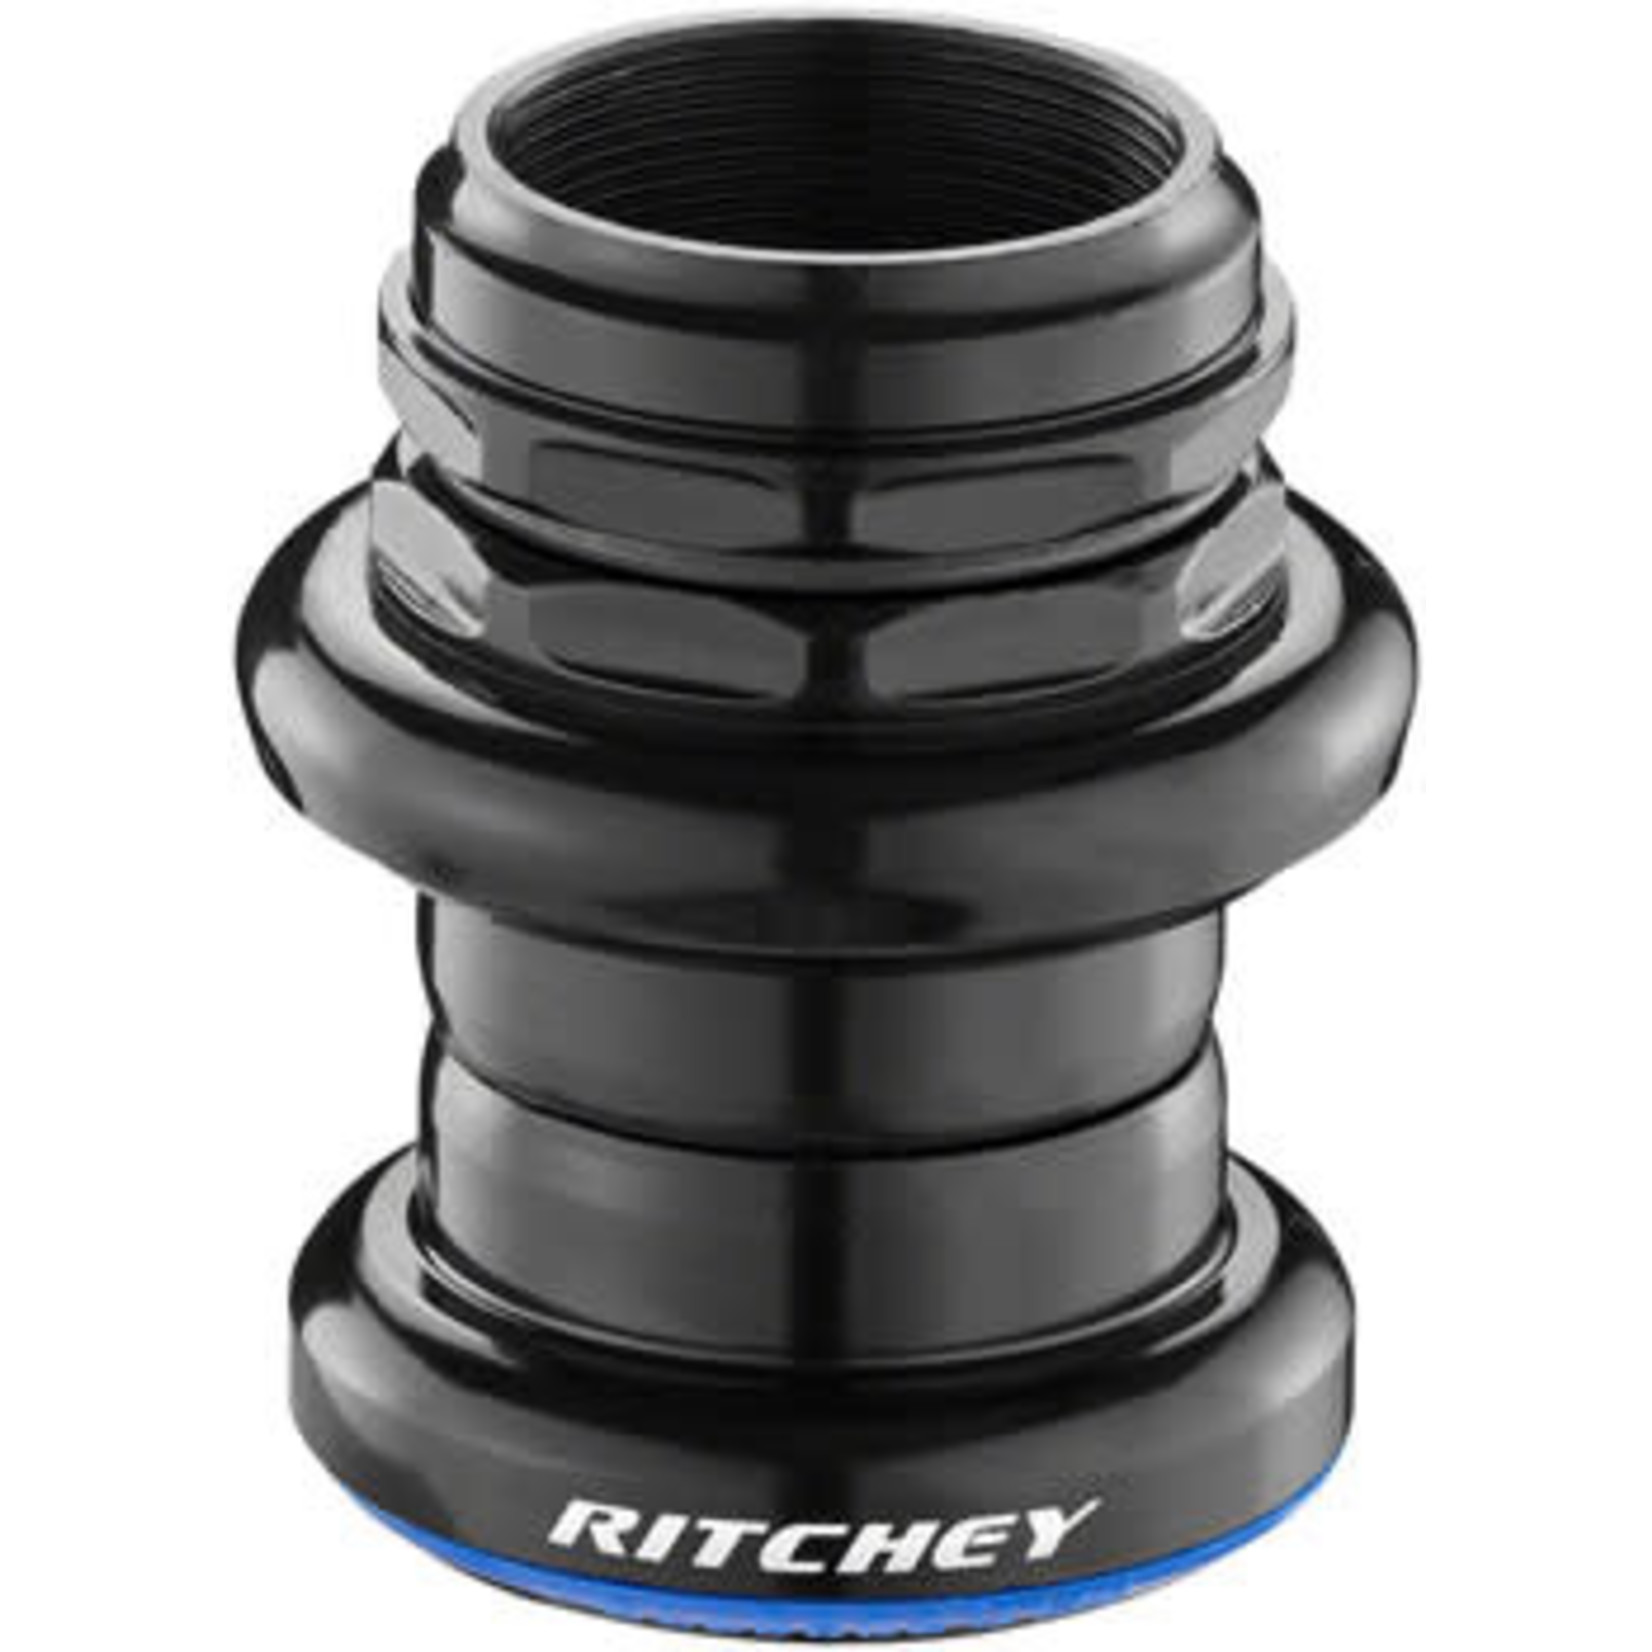 Ritchey Ritchey Comp 1 Threaded Headset - EC30/25.4 EC30/26 Black